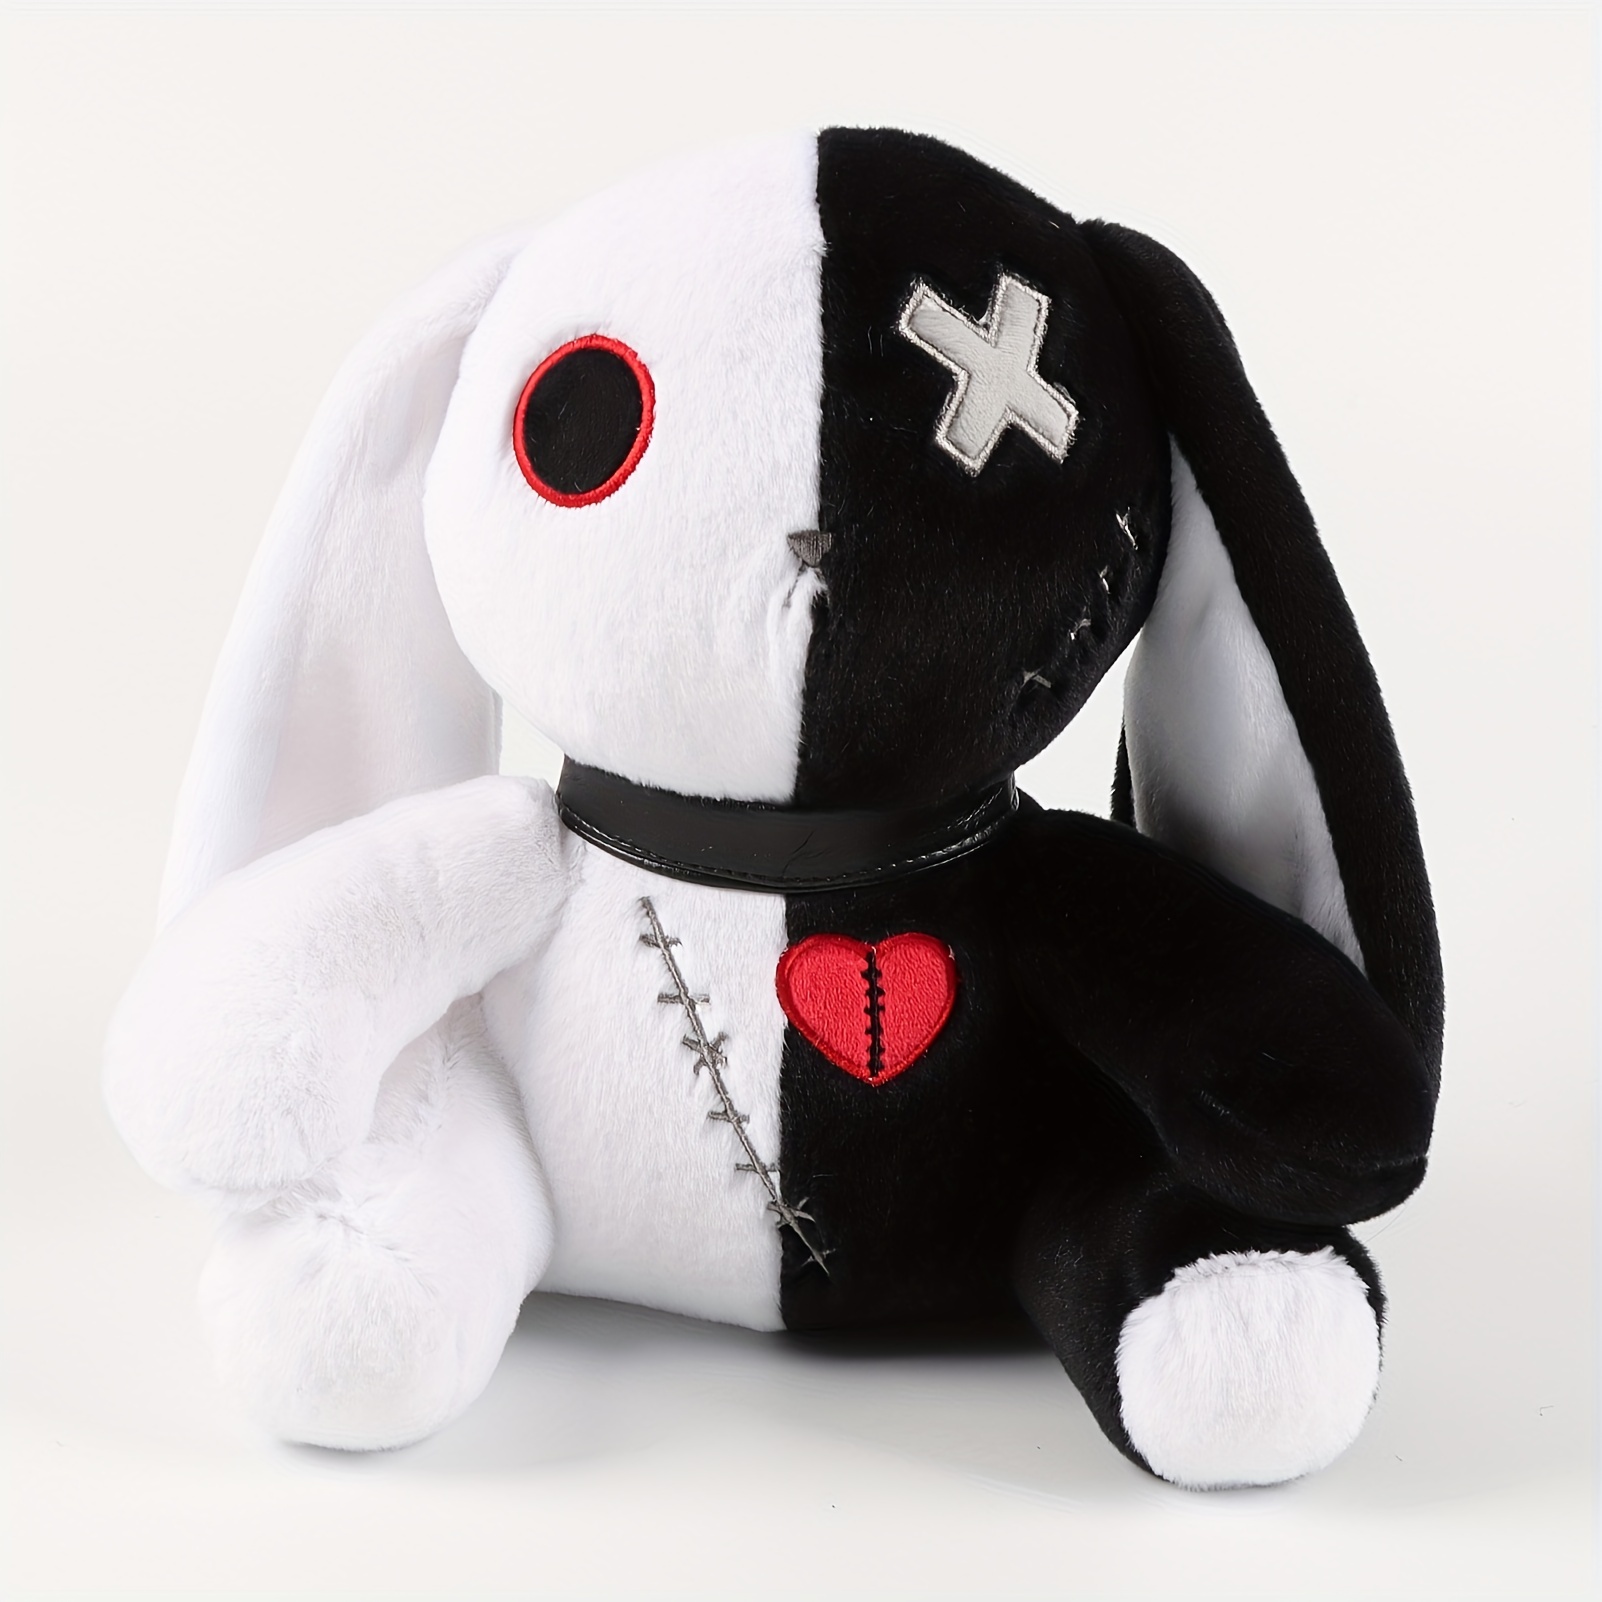 Mini Yeti Art Plushie, Creepy Cute, Gothic Homeware, Gothic Doll